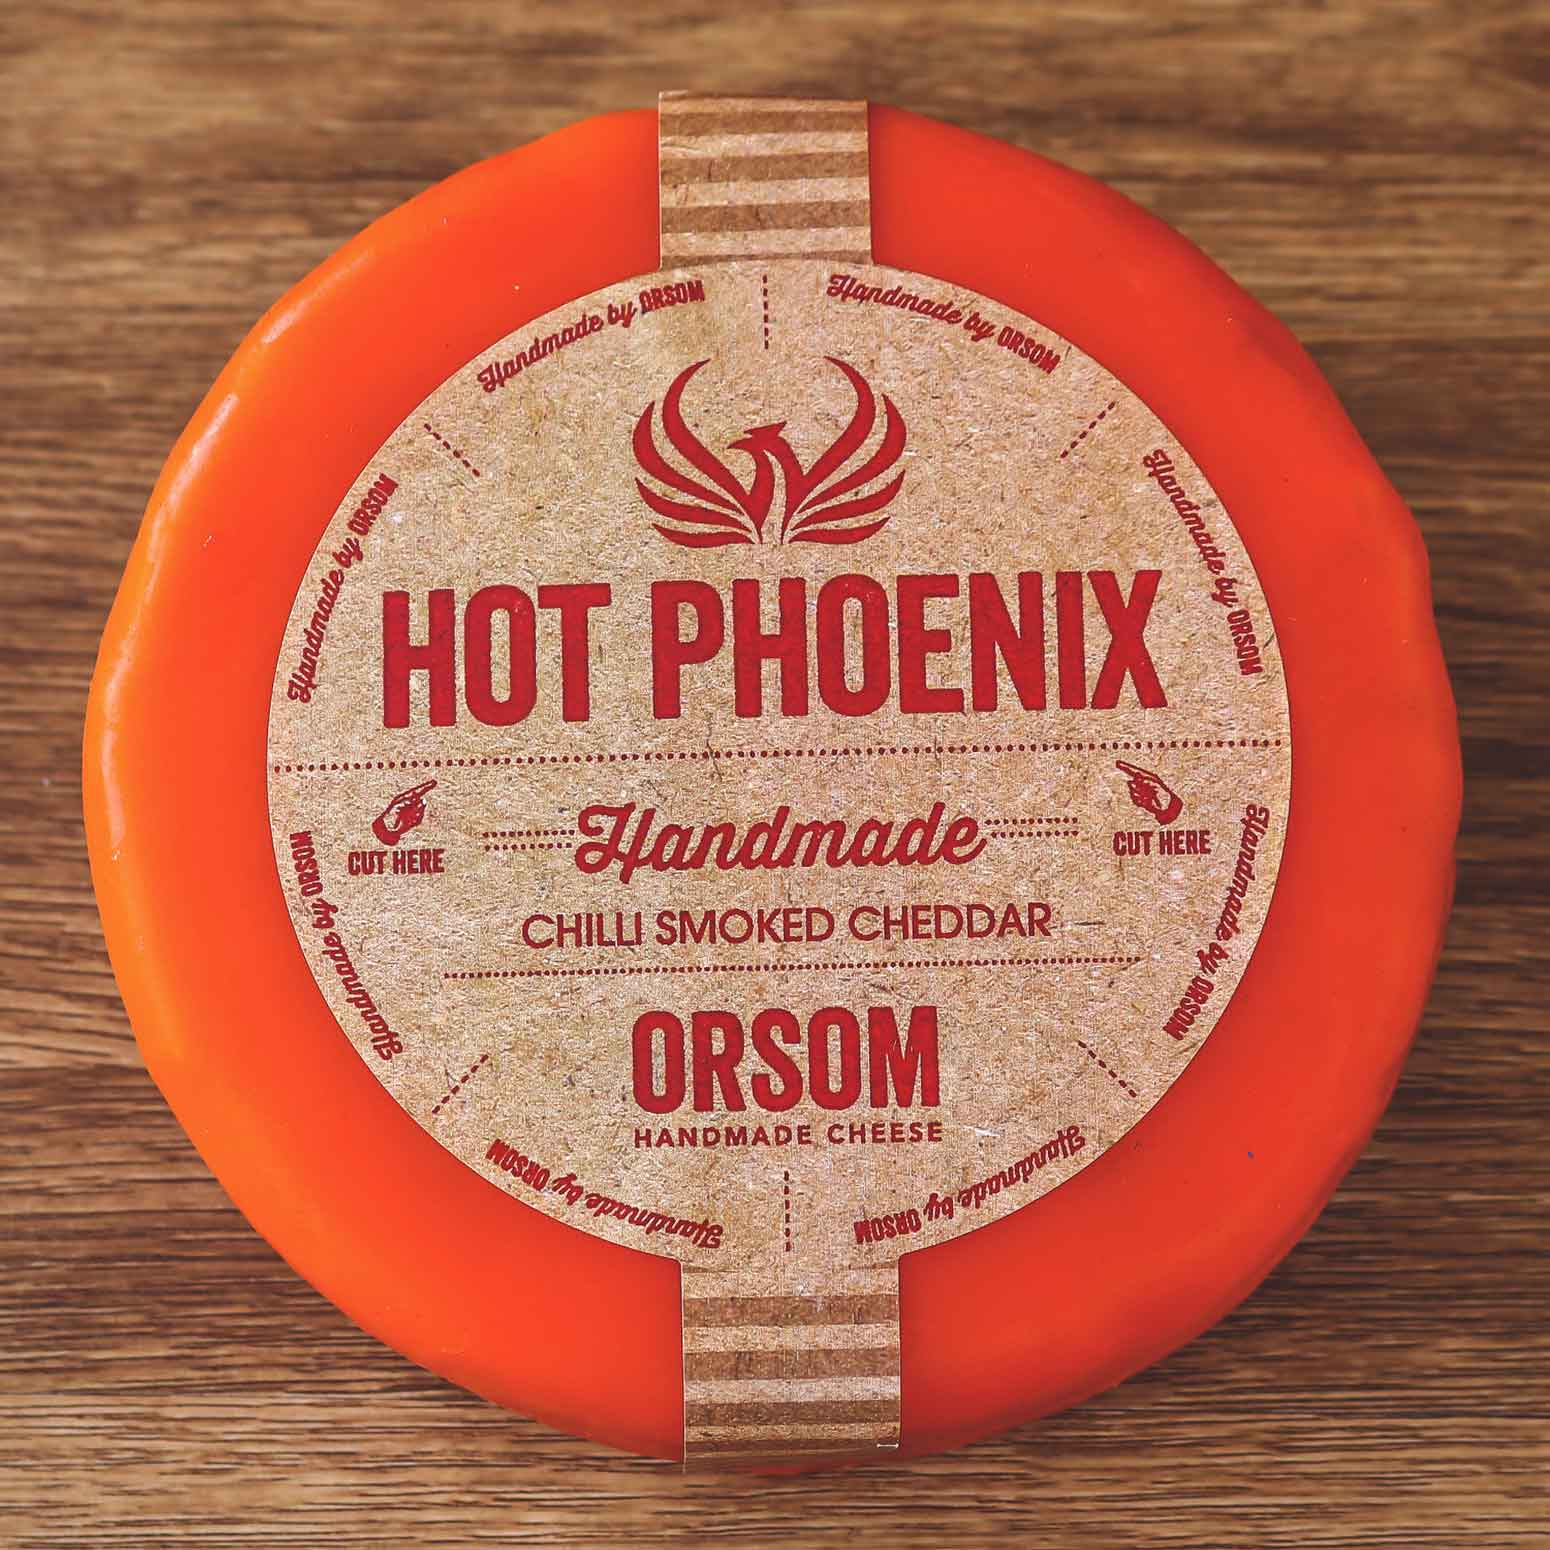 Packaging design for Orsom Handmade Cheese